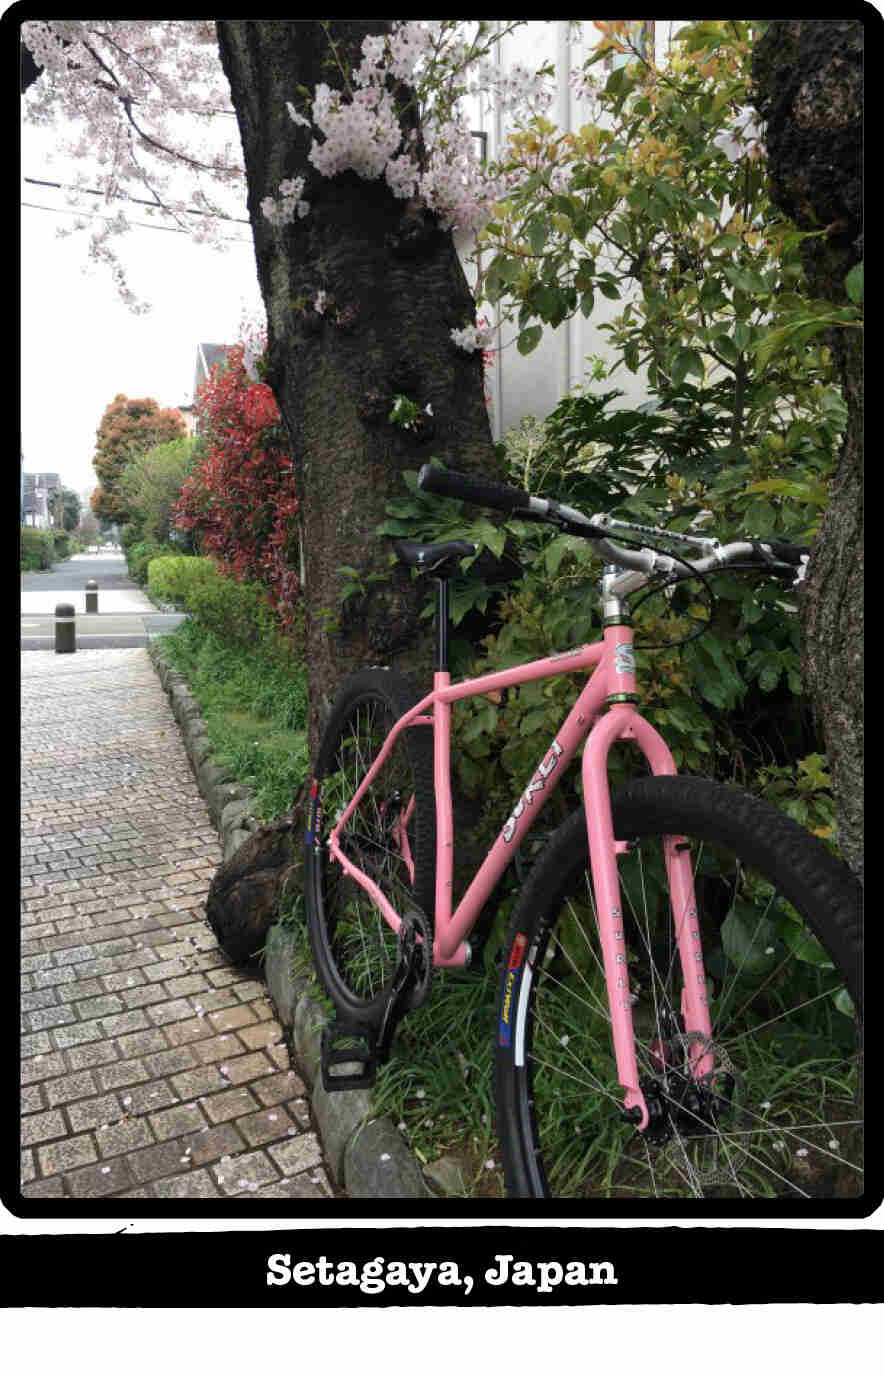 Front left view of a Surly Karate Monkey bike, pink, in the weeds alongside a sidewalk - Setagaya, Japan tag below image